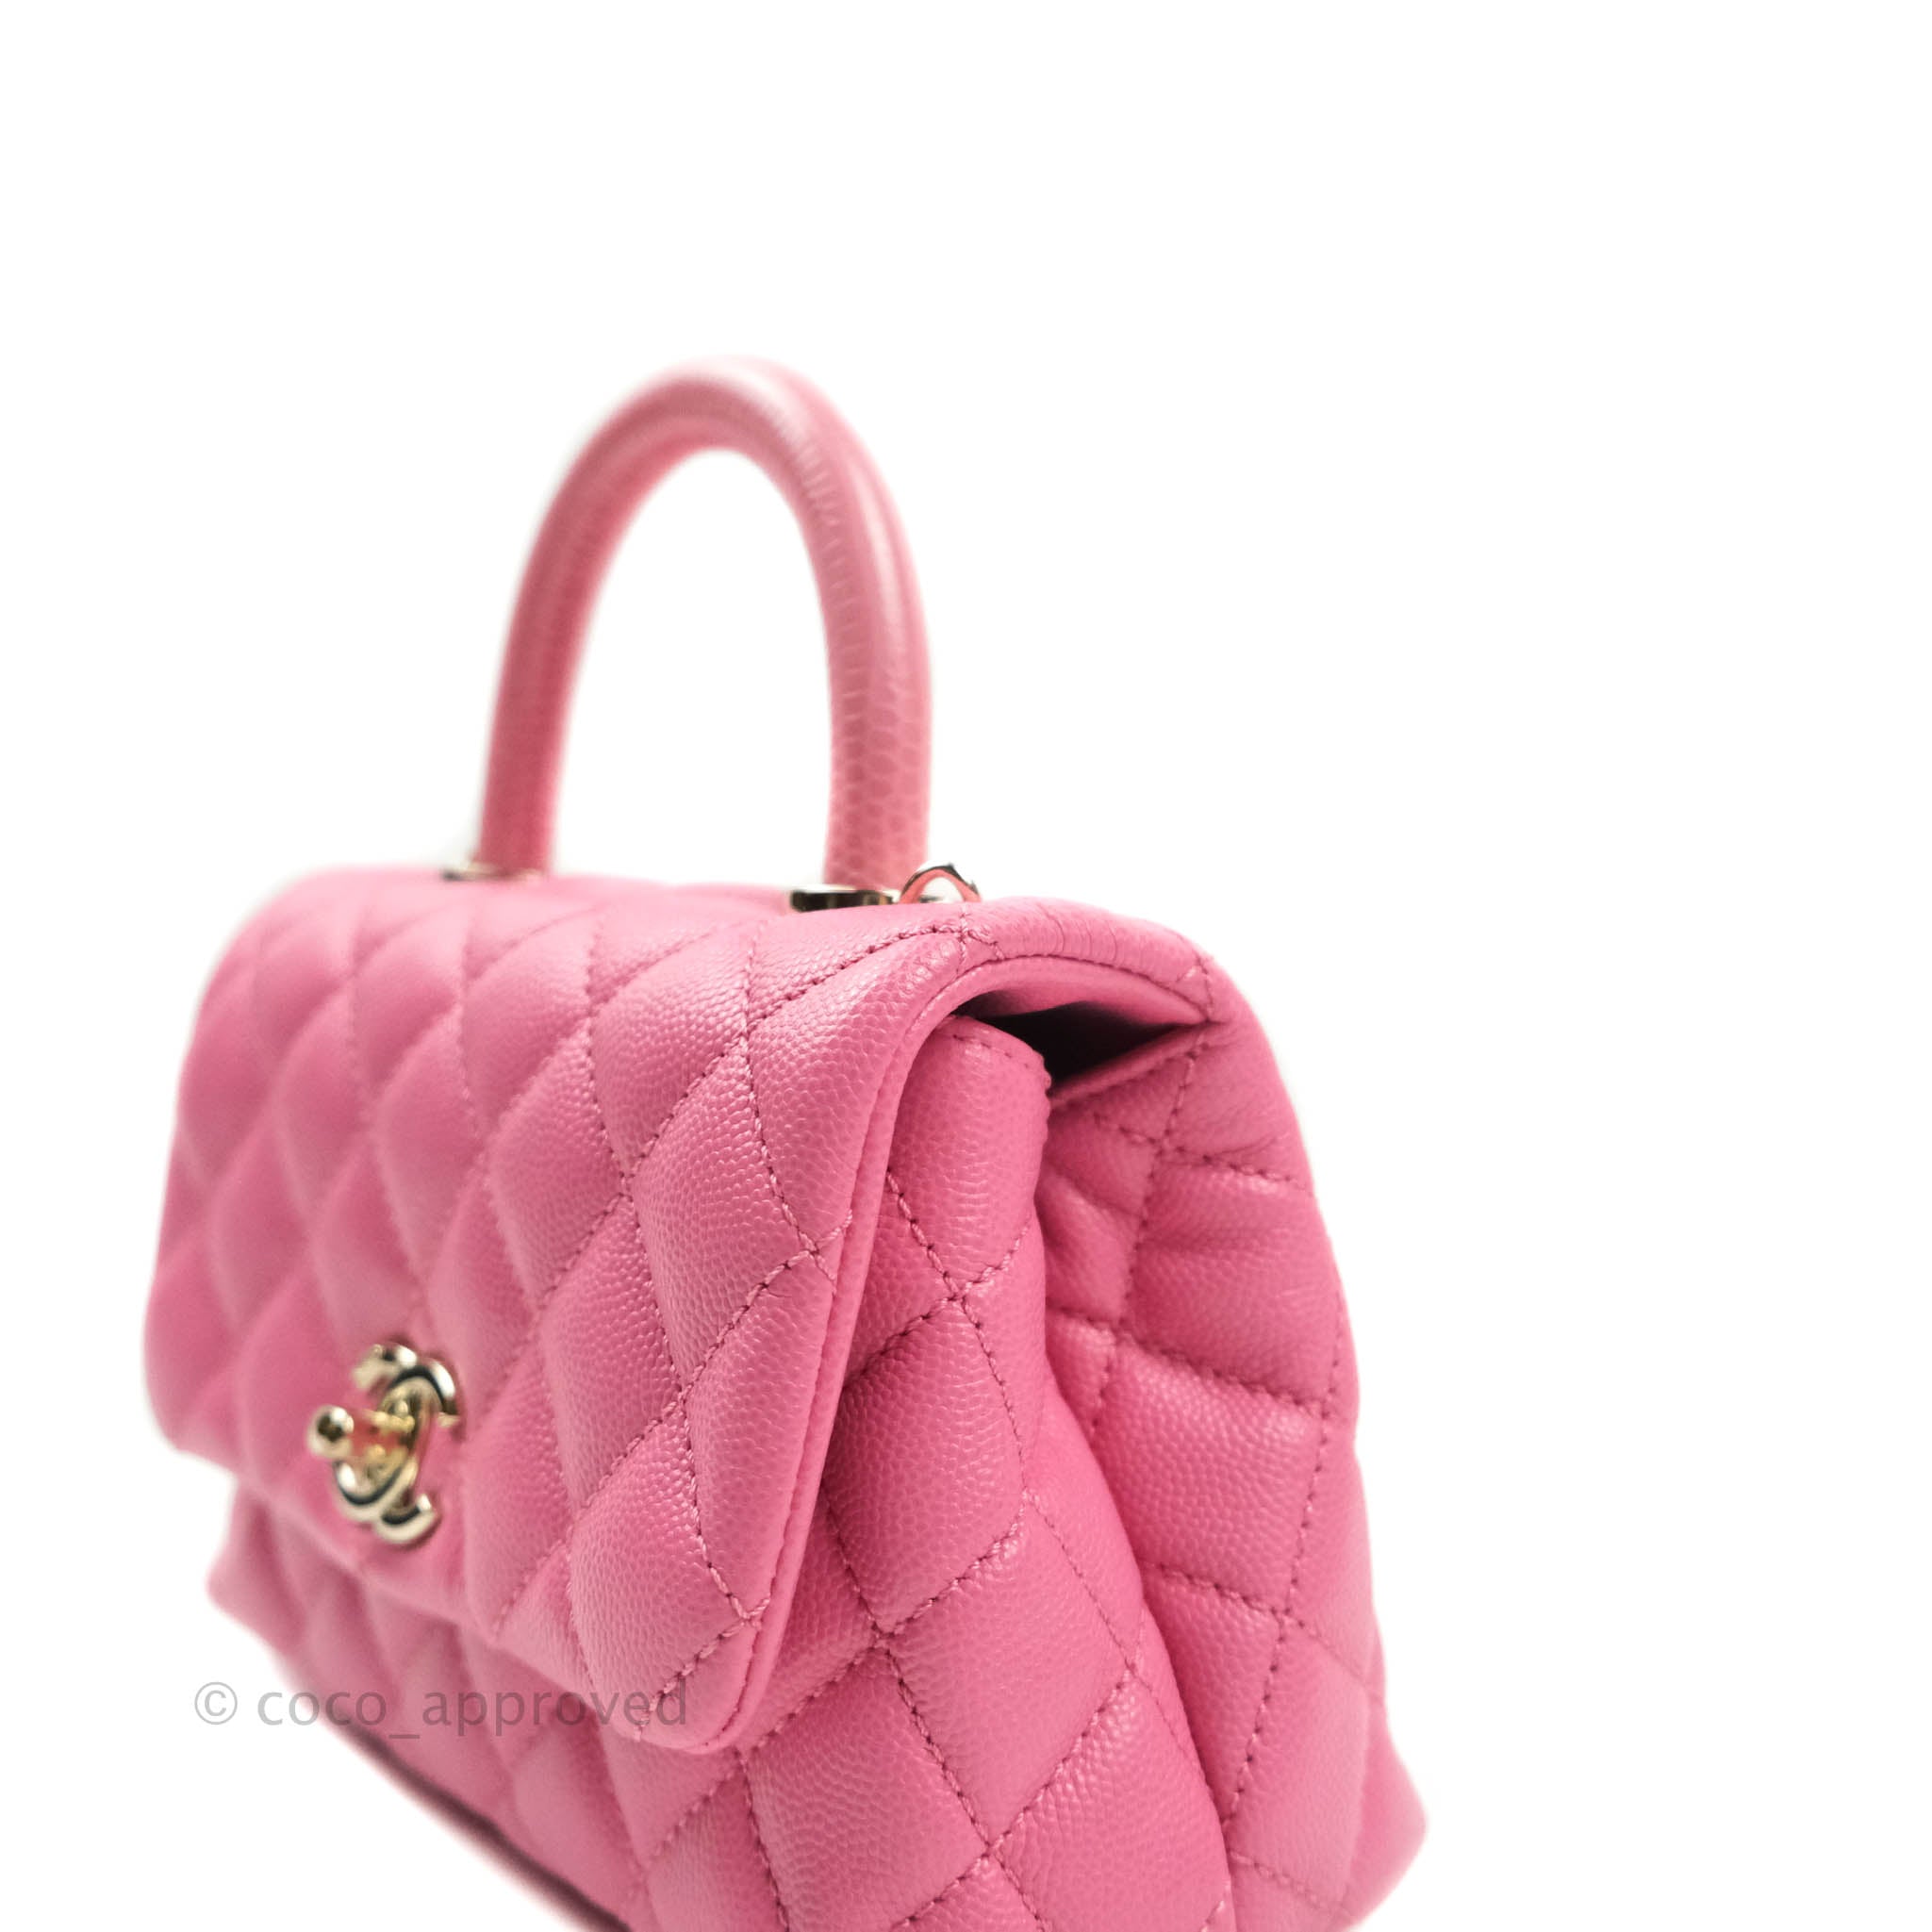 Chanel Mini Coco Handle Bag with Lizard Handle #Chanel #LimitedEdition 3850  eur…